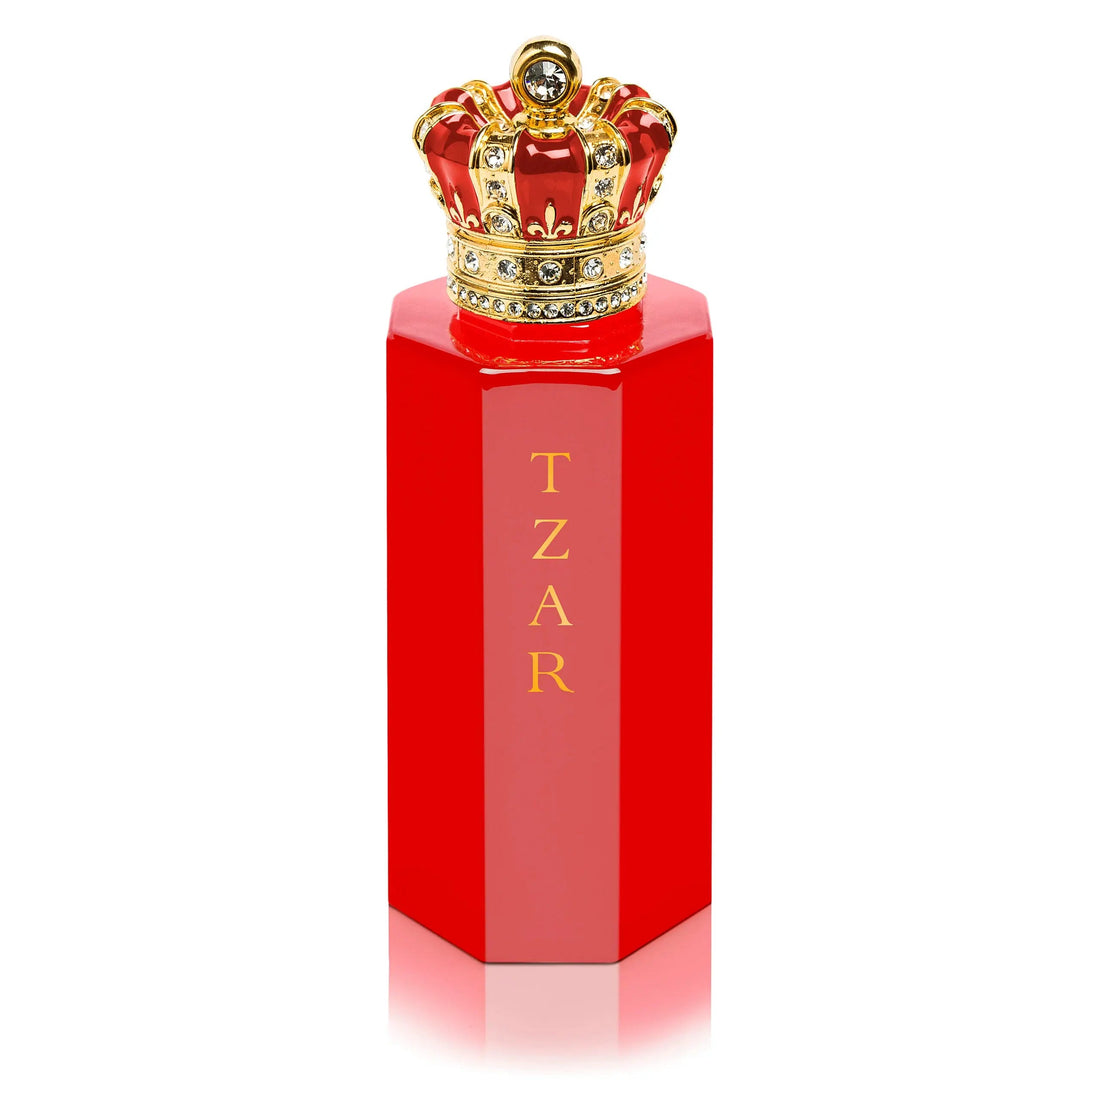 Corona Real del Zar - 100 ml